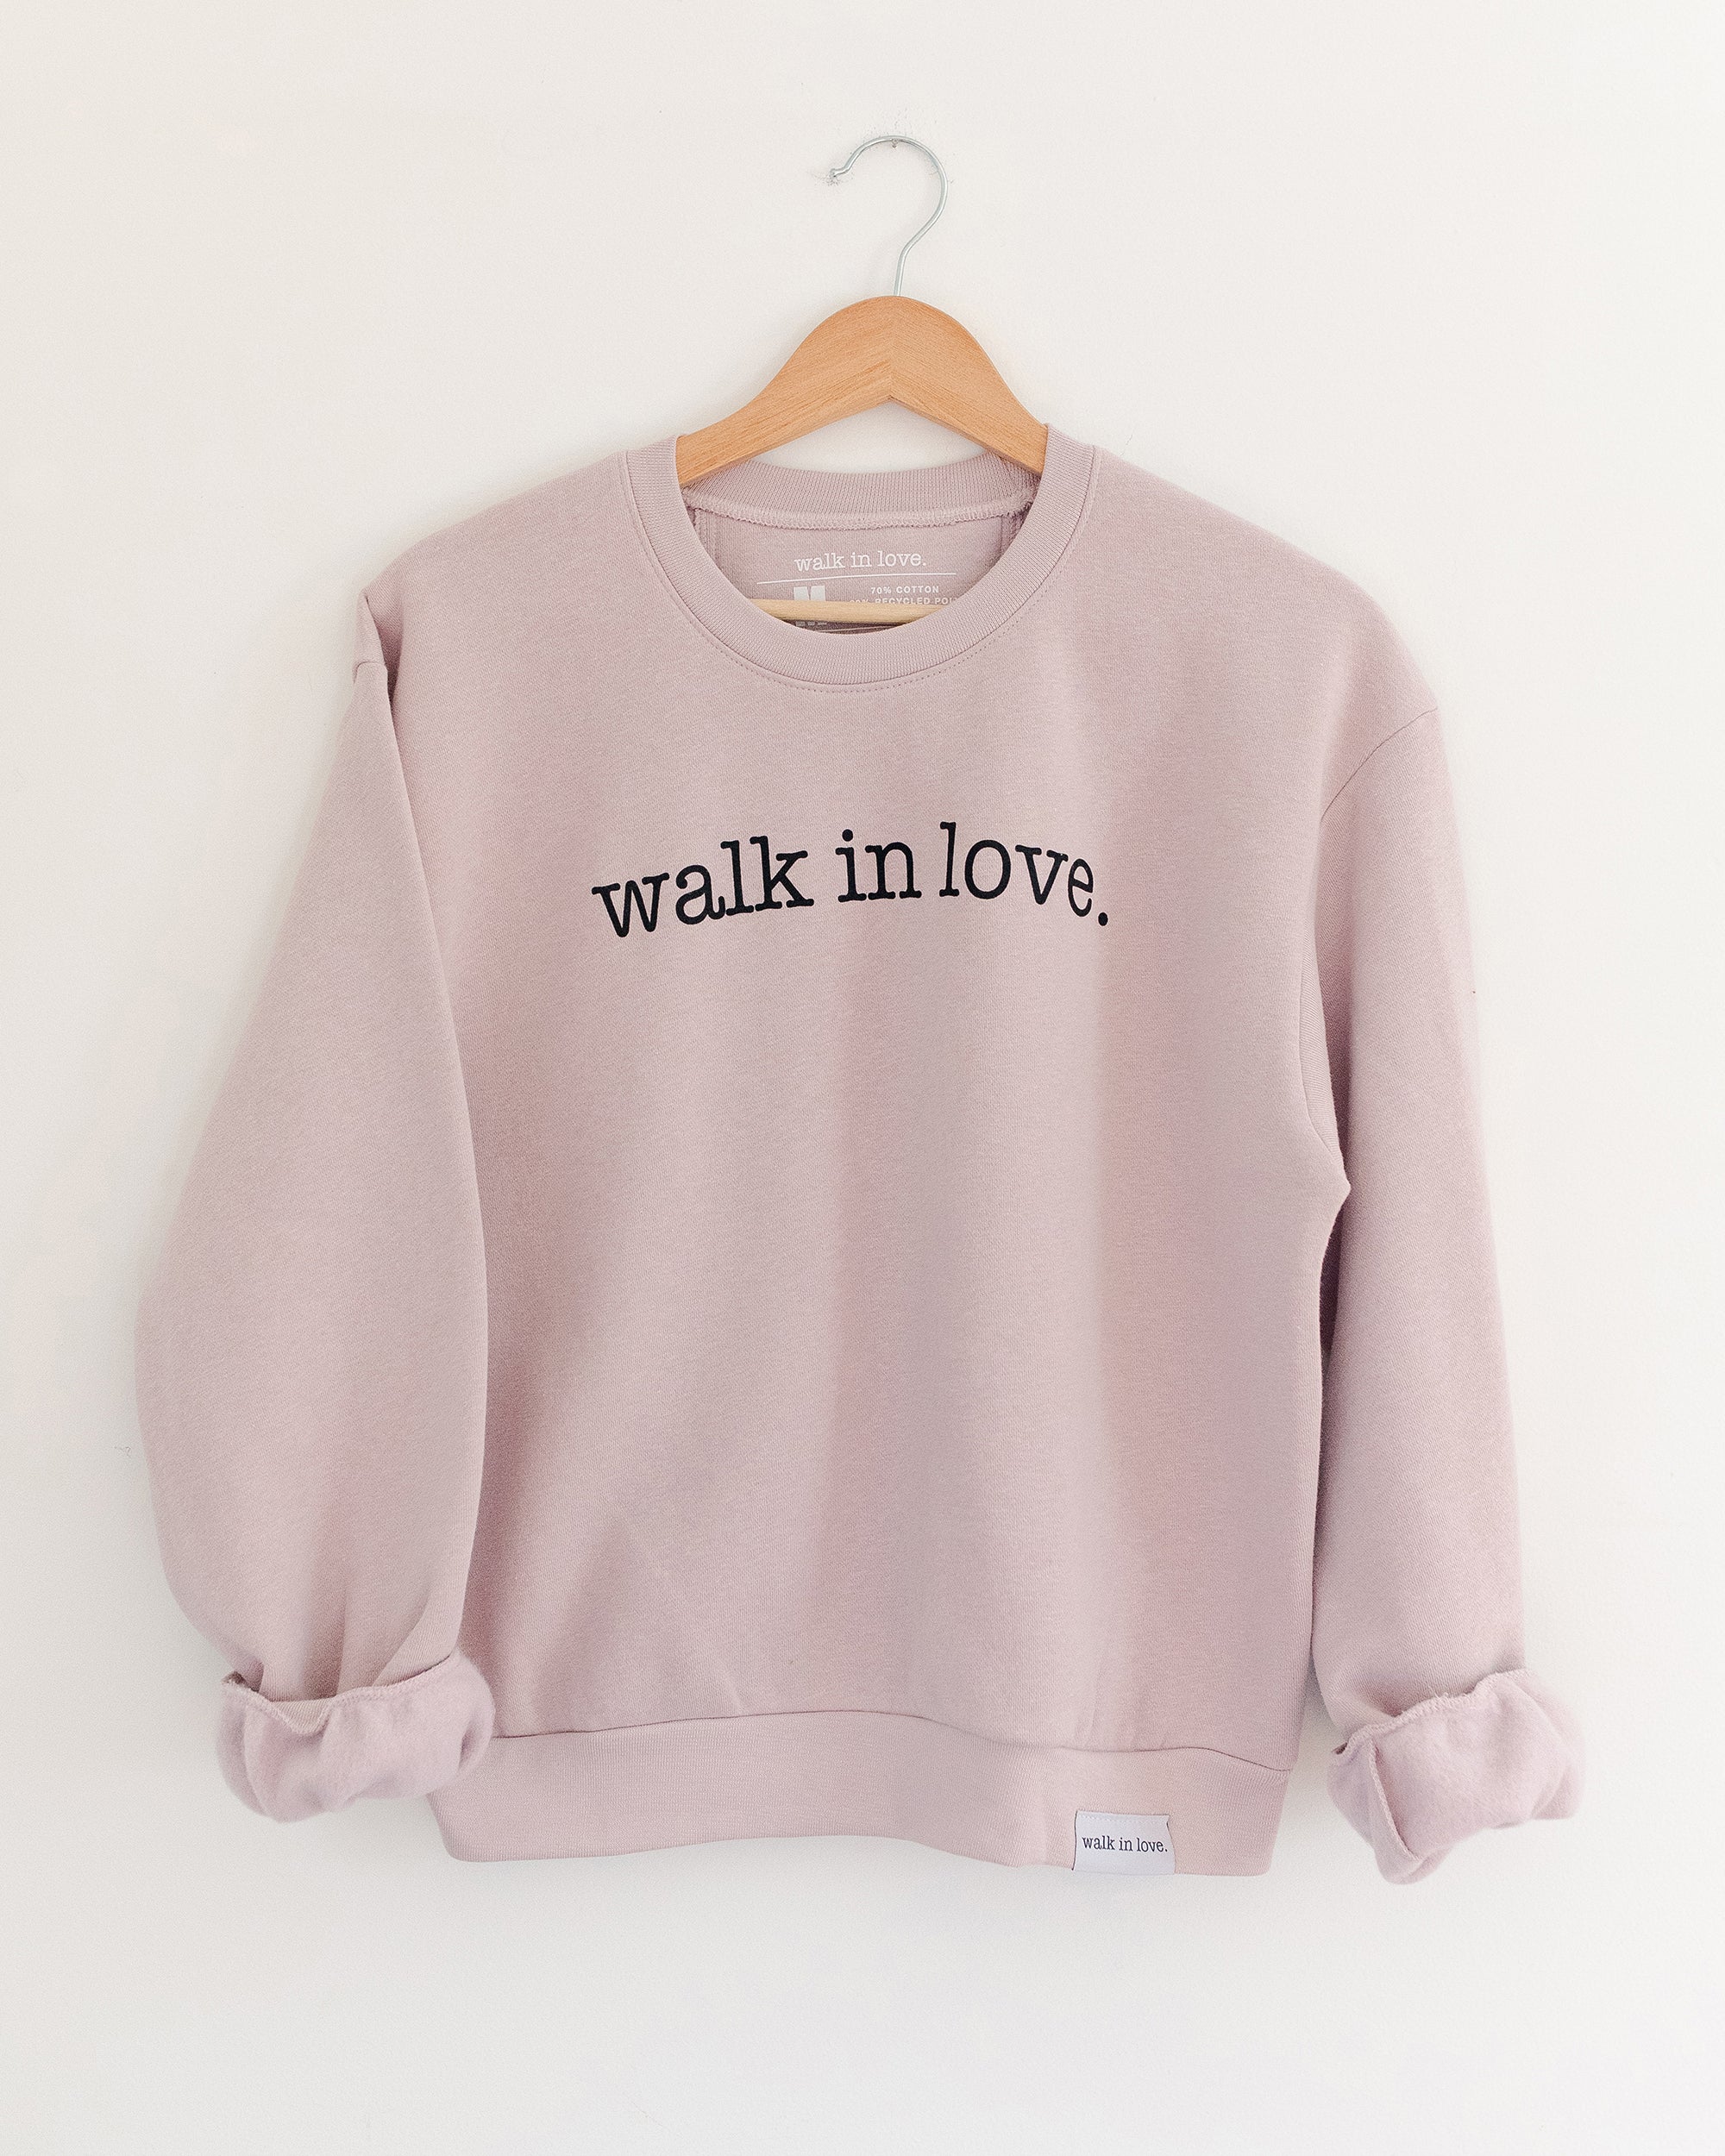 walk in love. Original Women's Blush Cropped Sweatshirt